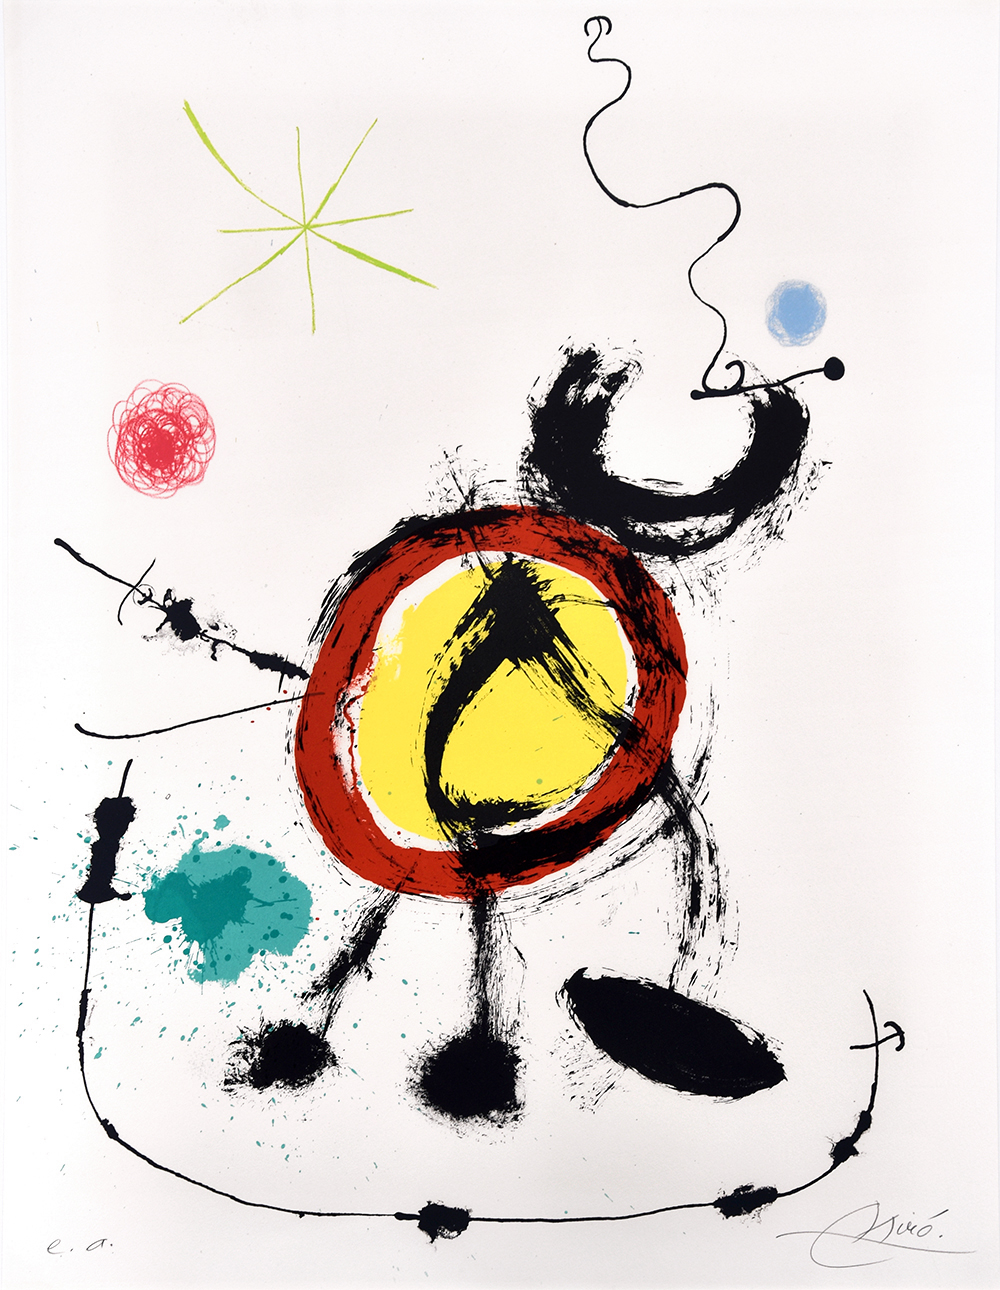 Joan Miró, Oiseau migrateur (Migratory Birds), 1970